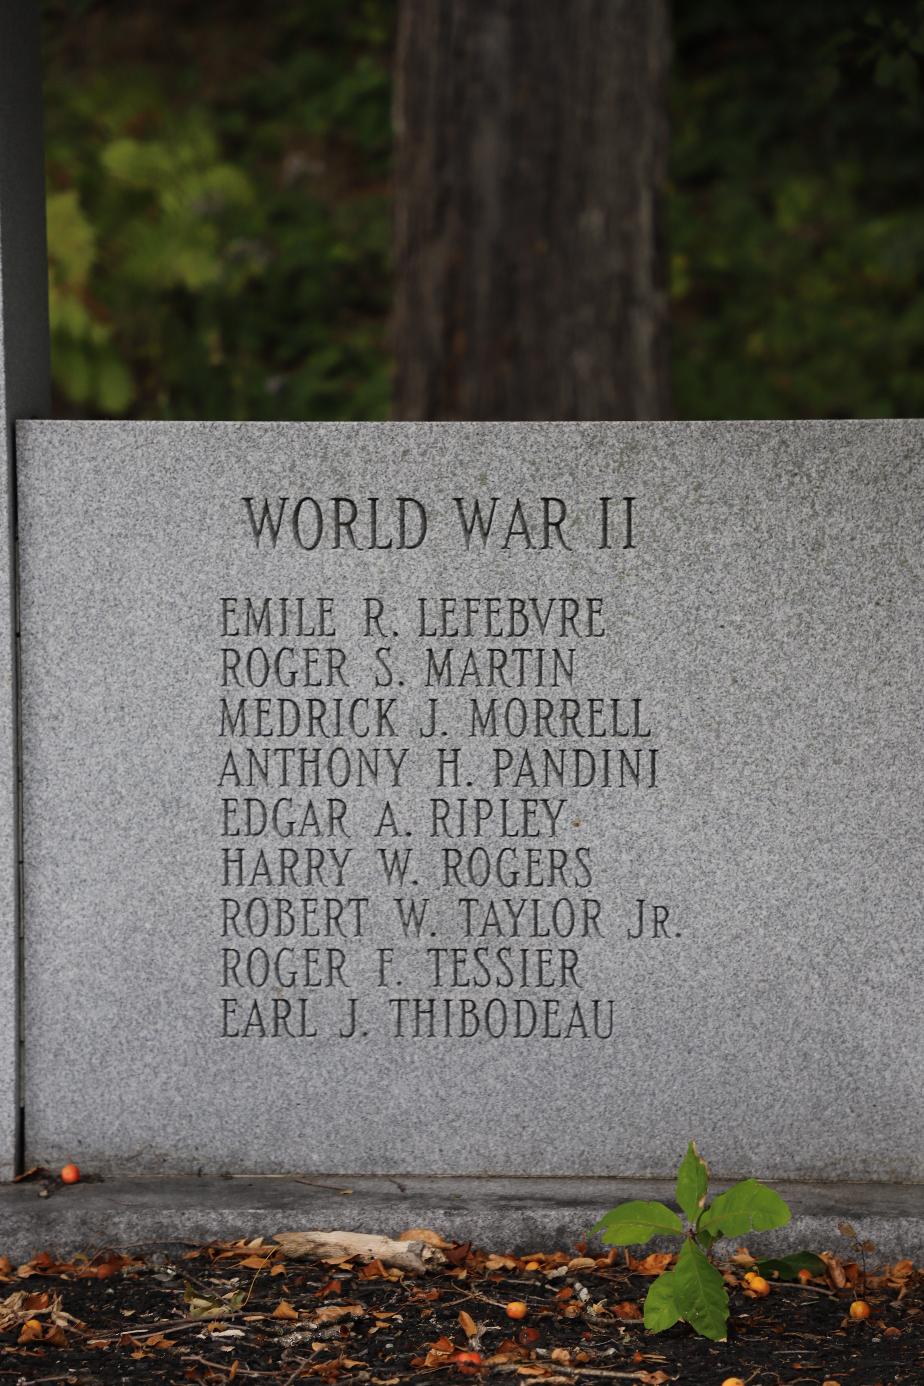 Franklin New Hampshire World War II, Korean War & Vietnam War Veterans Memorial